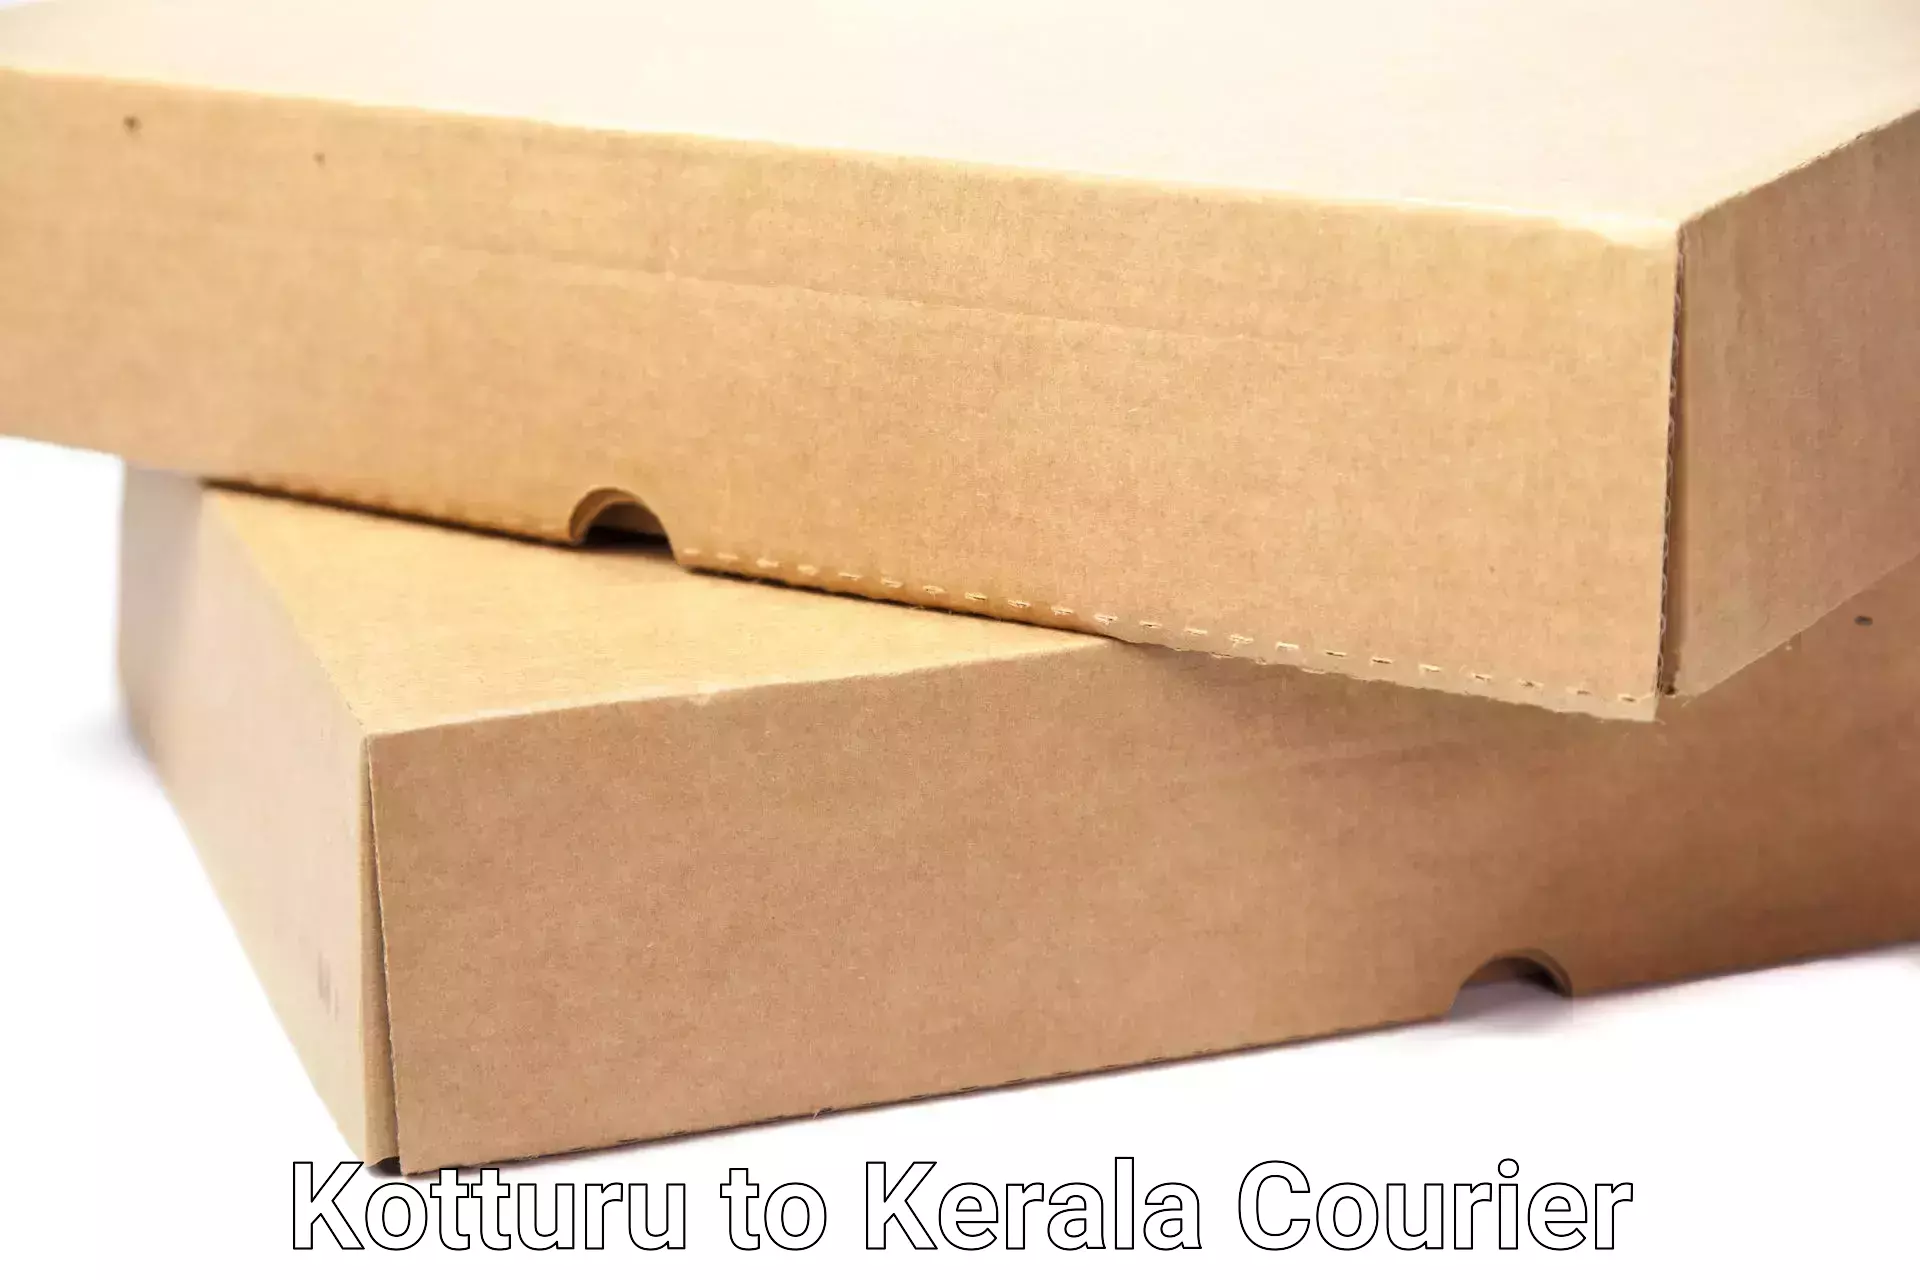 Residential moving experts Kotturu to Kerala